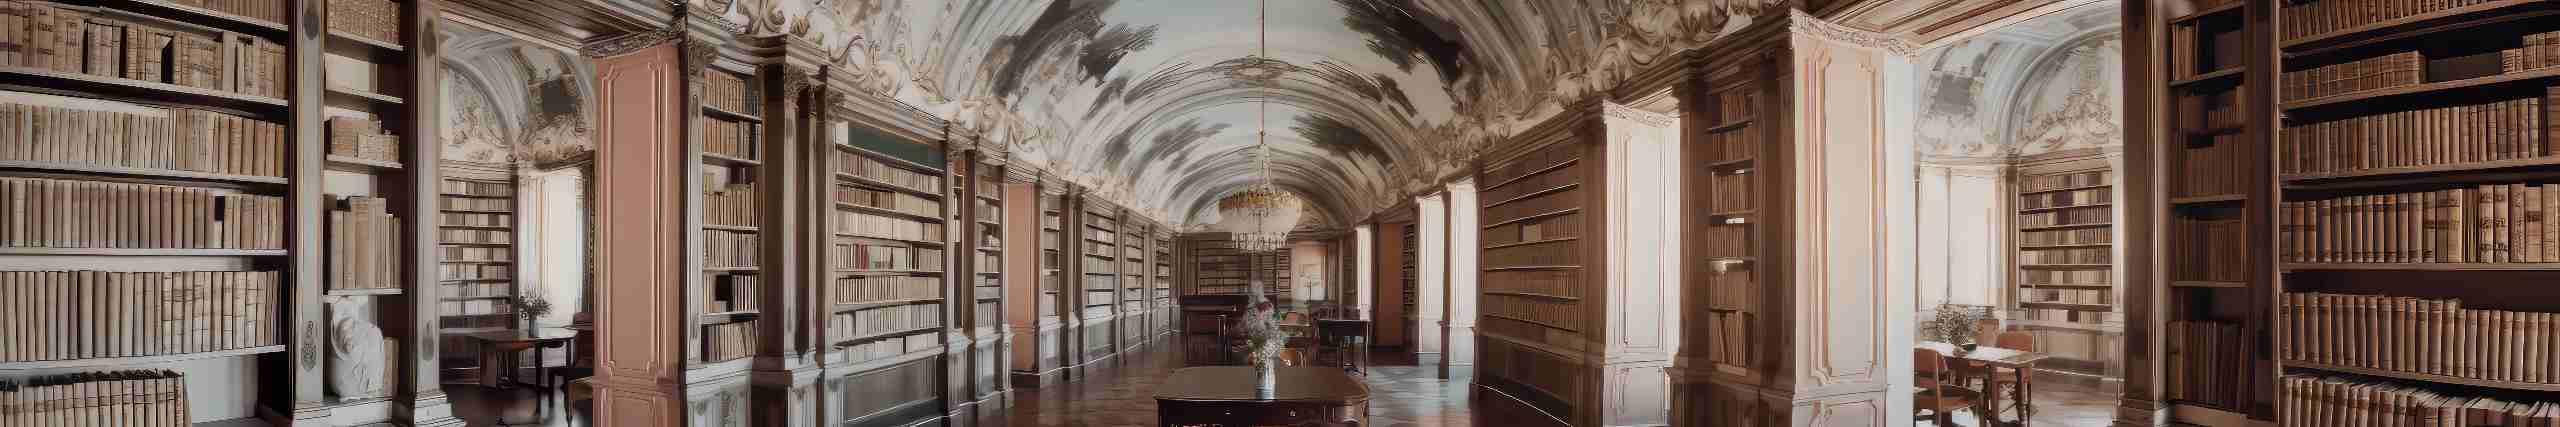 Dark Academia Aesthetic Library Interior with Bookish Decor and Vintage Renaissance Art